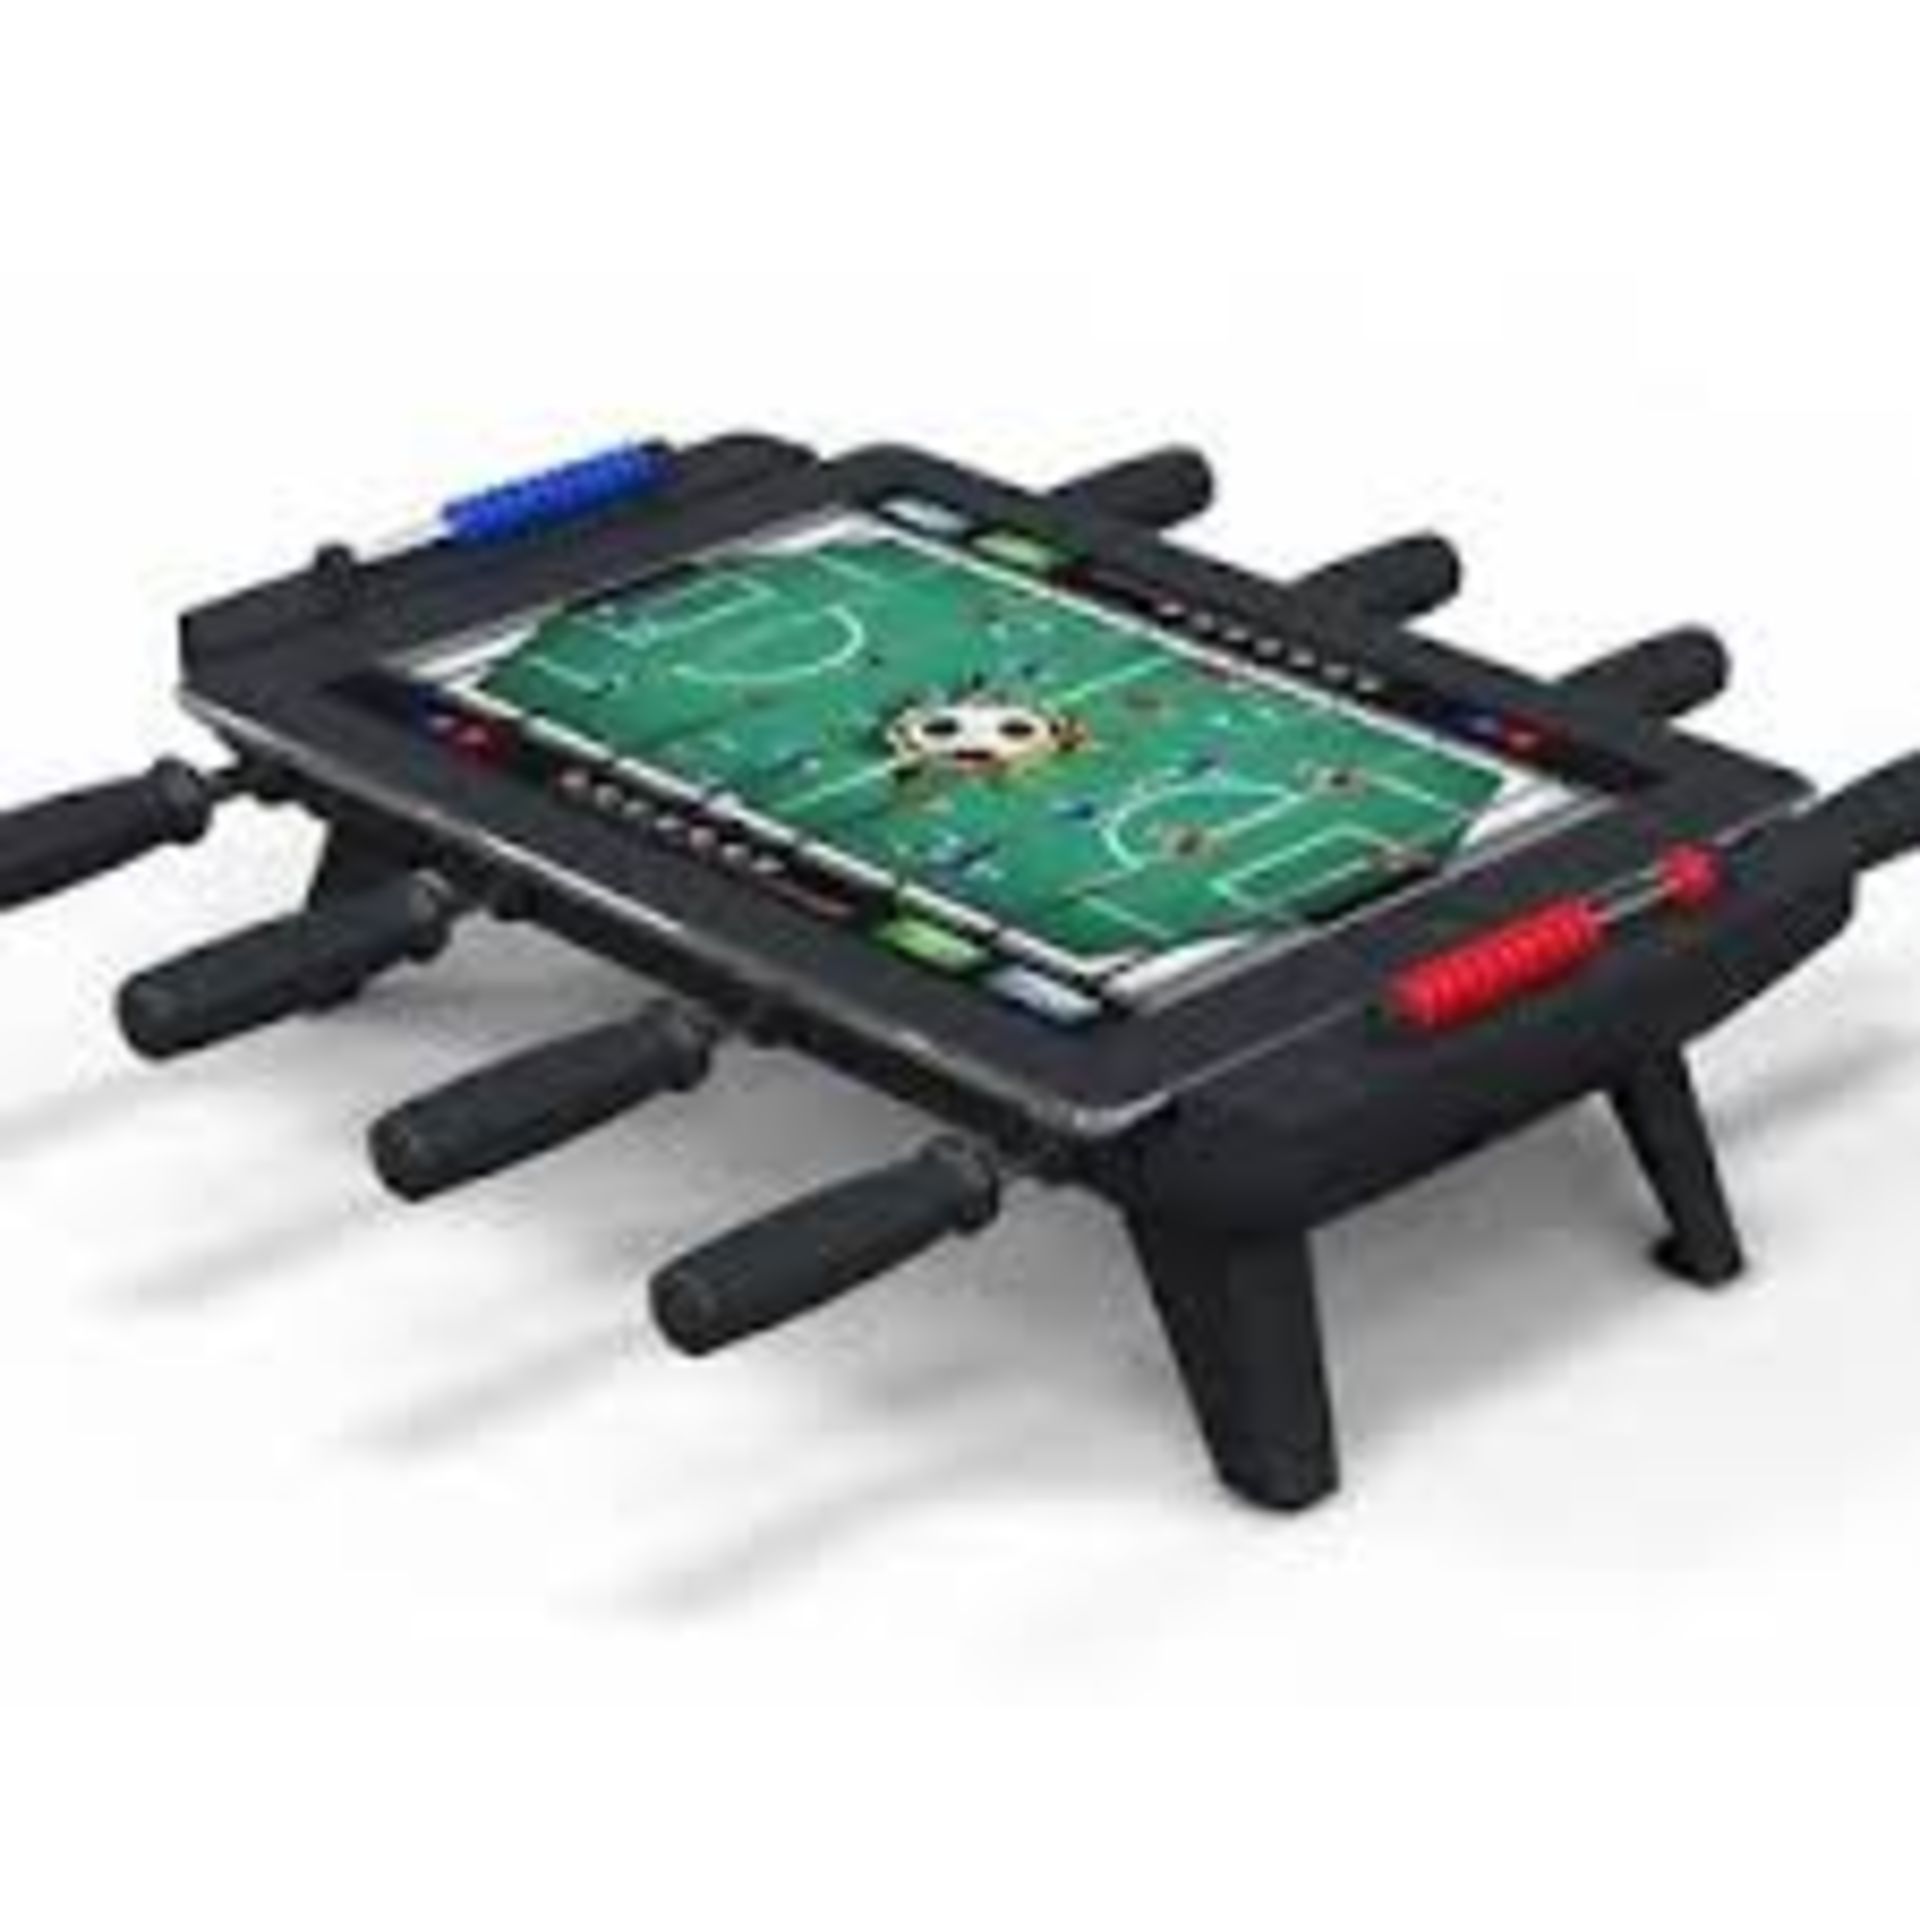 155 x Table Football for iPad 1-2-3 - Classic Match Foosball | 815166010226 | RRP £ 7748.45